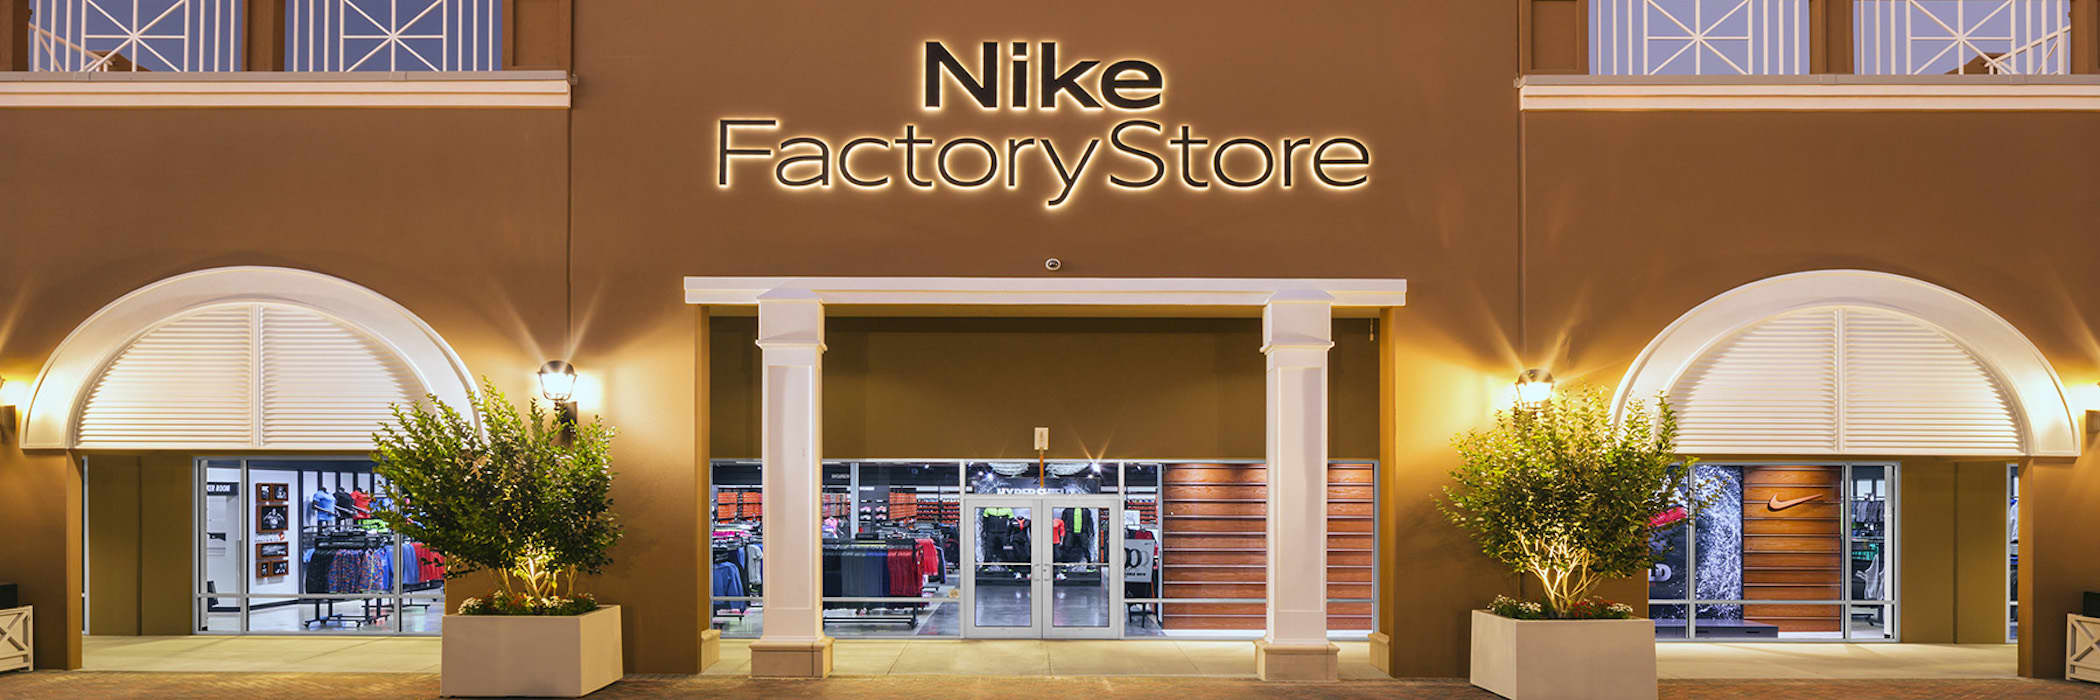 Leed scheidsrechter Omdat Nike Factory Store - Pearl. Pearl, MS. Nike.com